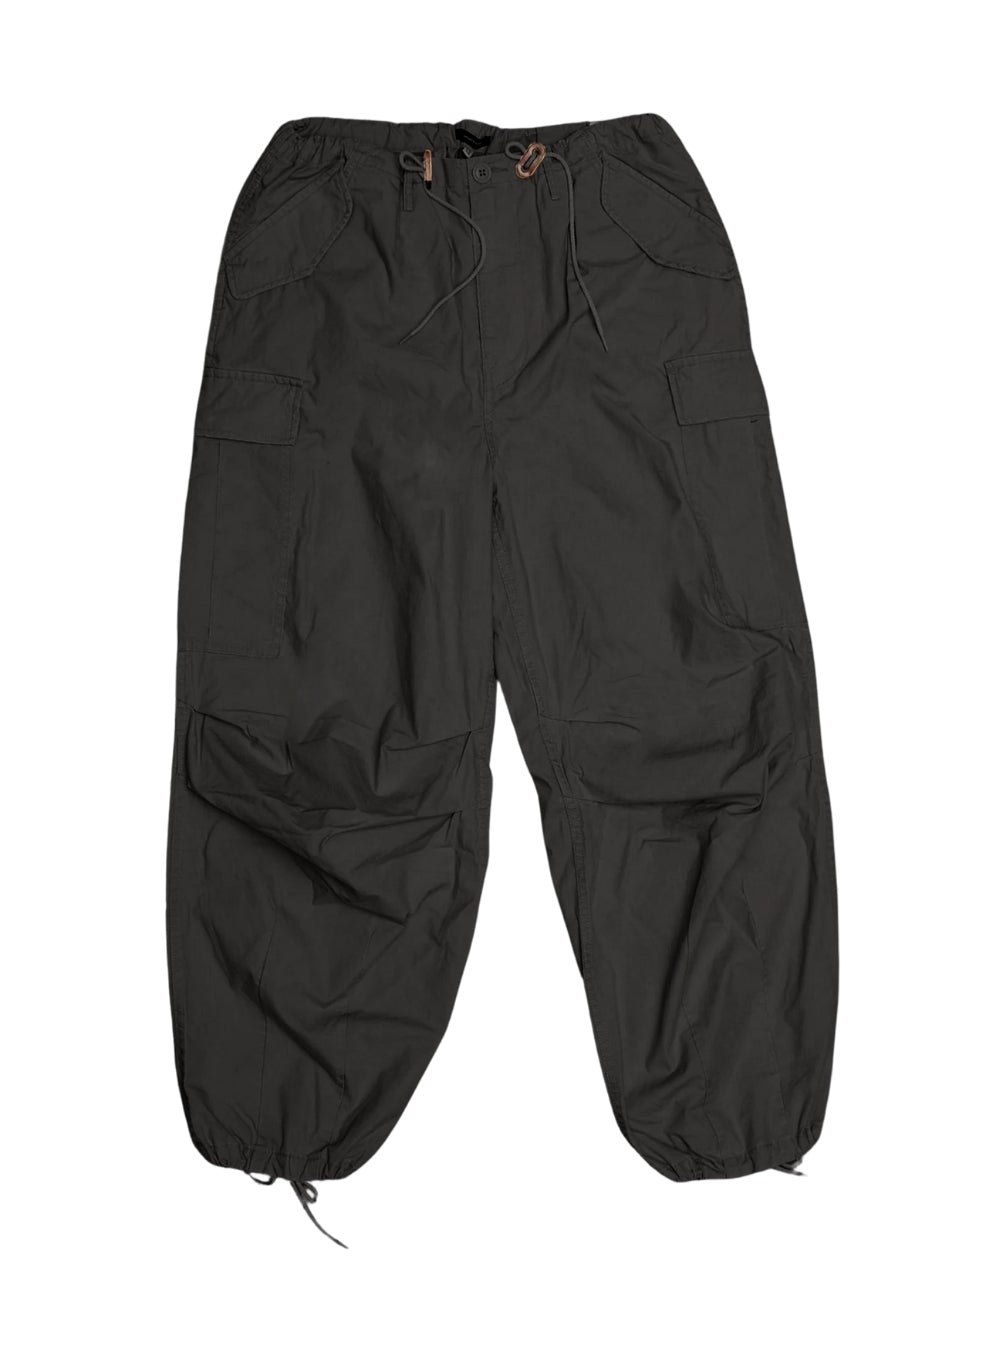 Shop Deluxe Black Uniform EMT Pant - Fatigues Army Navy Gear